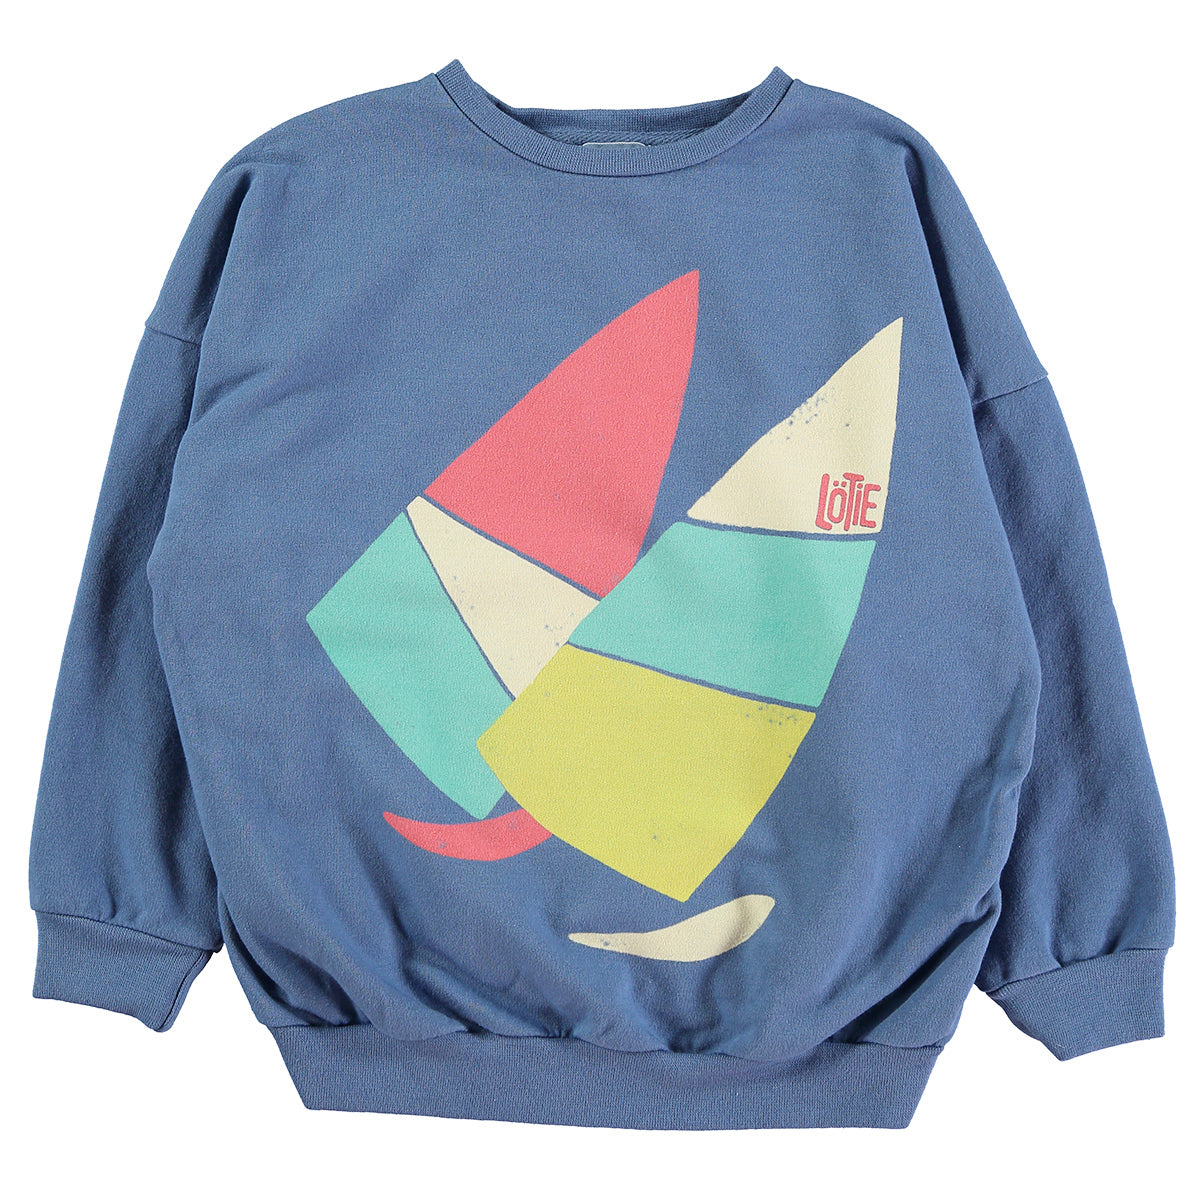 Lotie Kids - sweatshirt - windsurf - blue